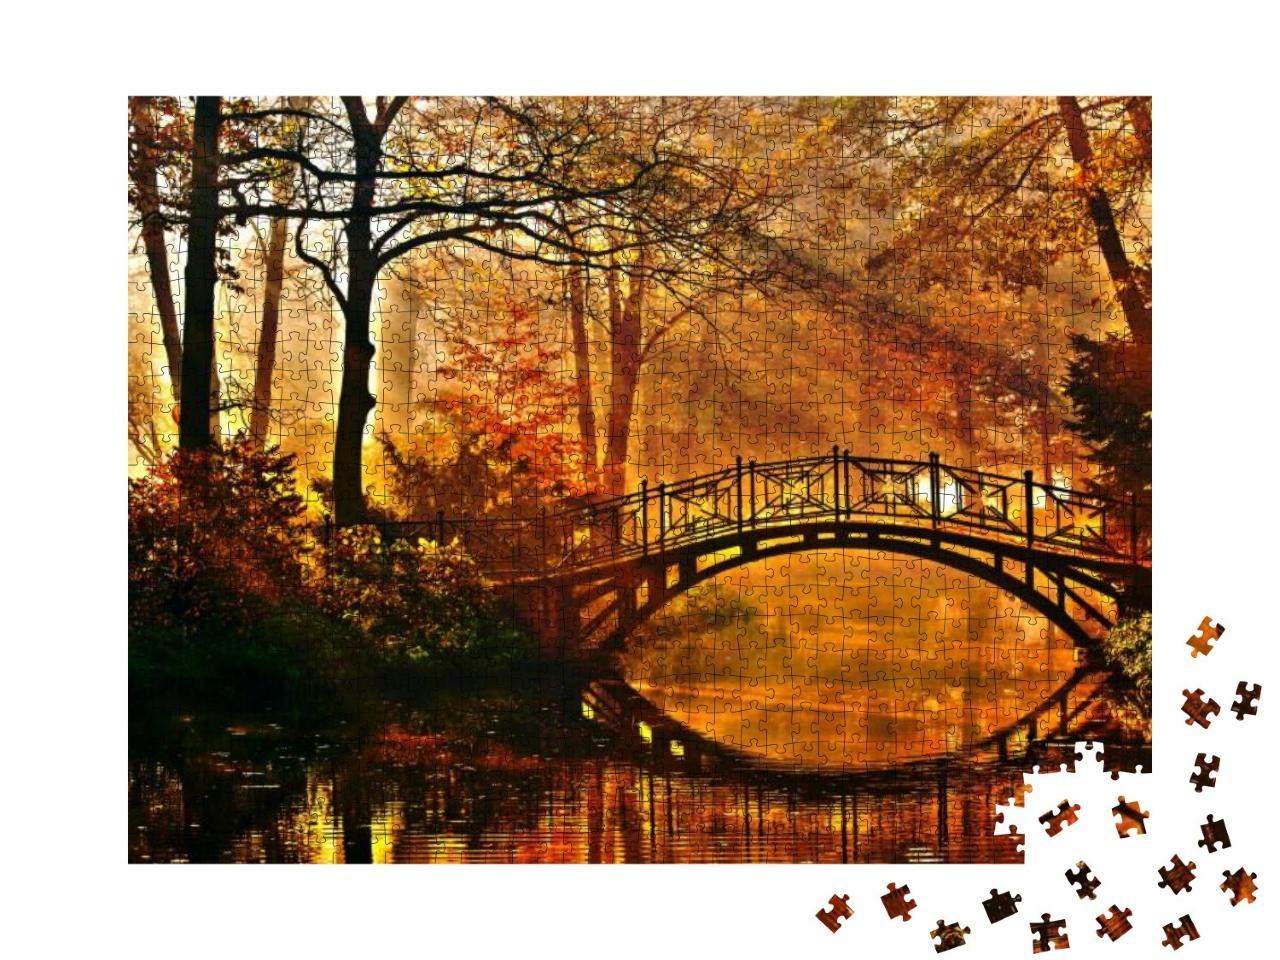 Autumn - Old Bridge in Autumn Misty Park... Jigsaw Puzzle with 1000 pieces